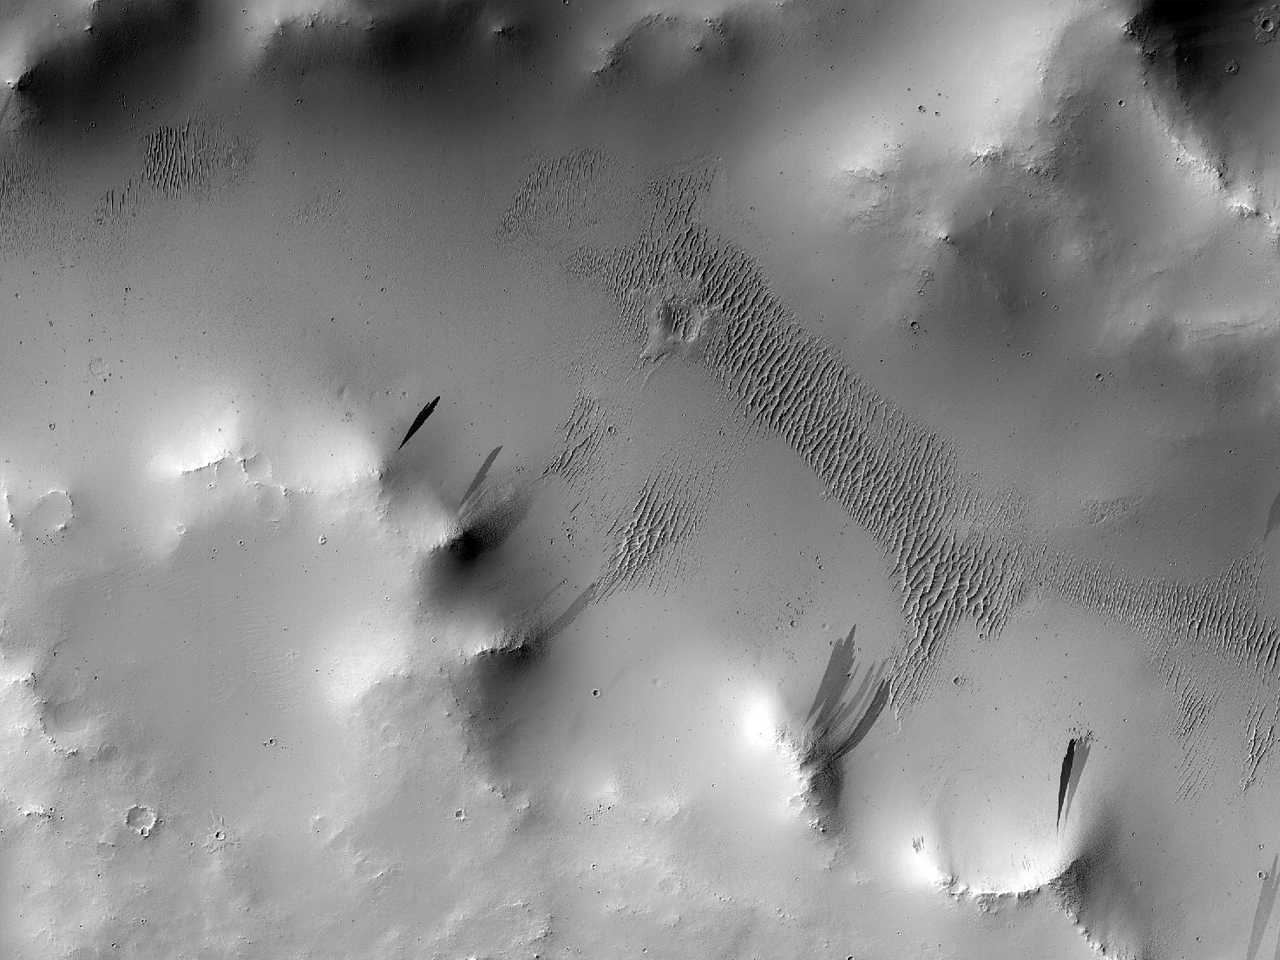 Manderndes Terrain in der Nhe eines Kraters in Terra Sabaea